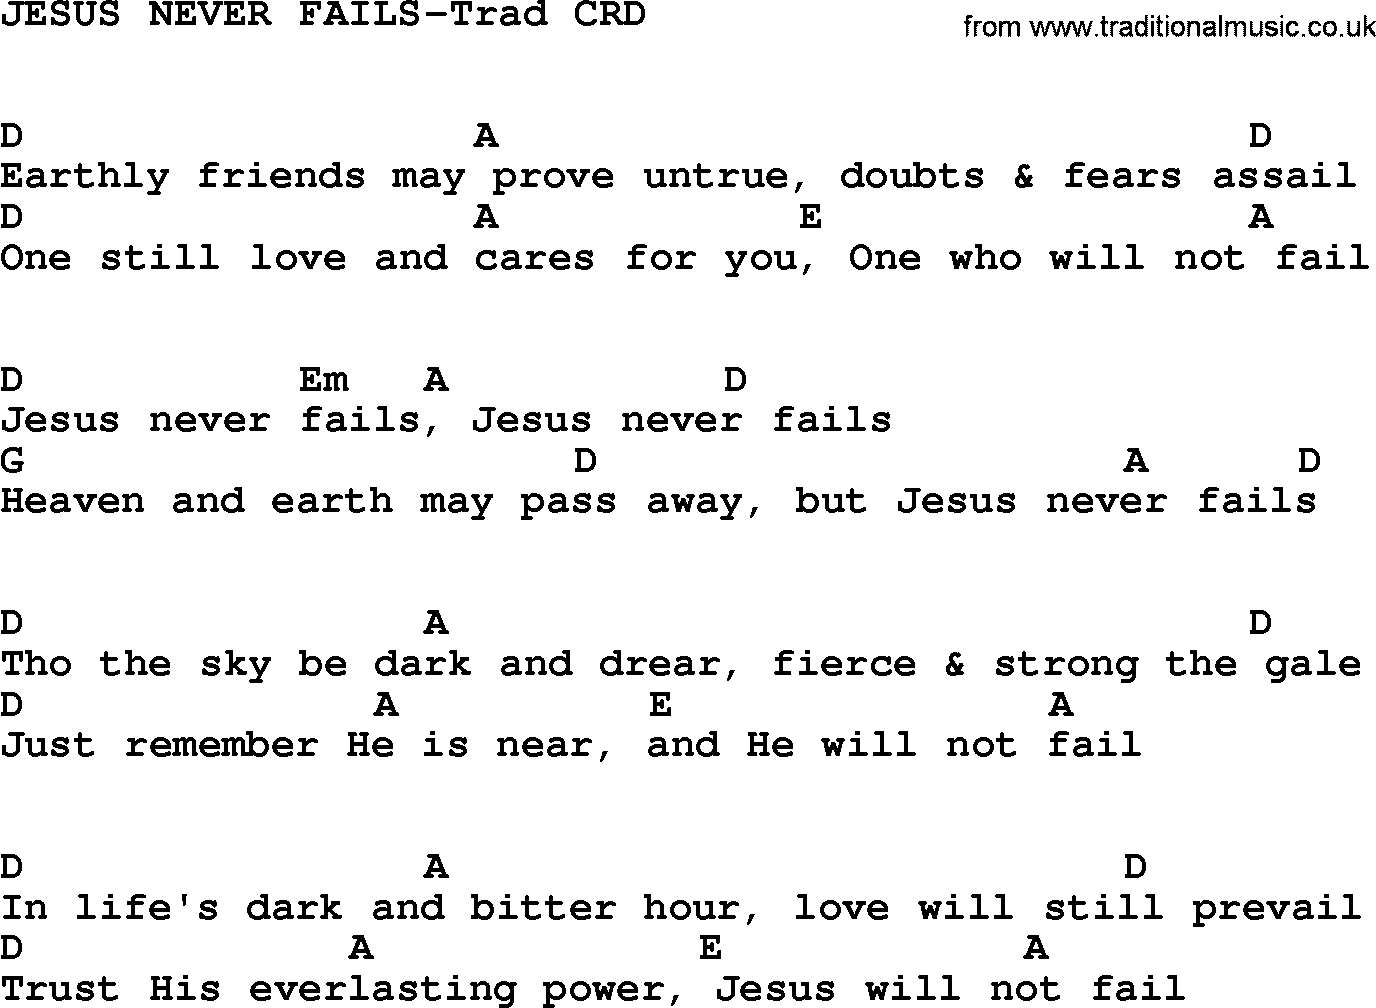 Gospel Song: Jesus Never Fails-Trad, lyrics and chords.